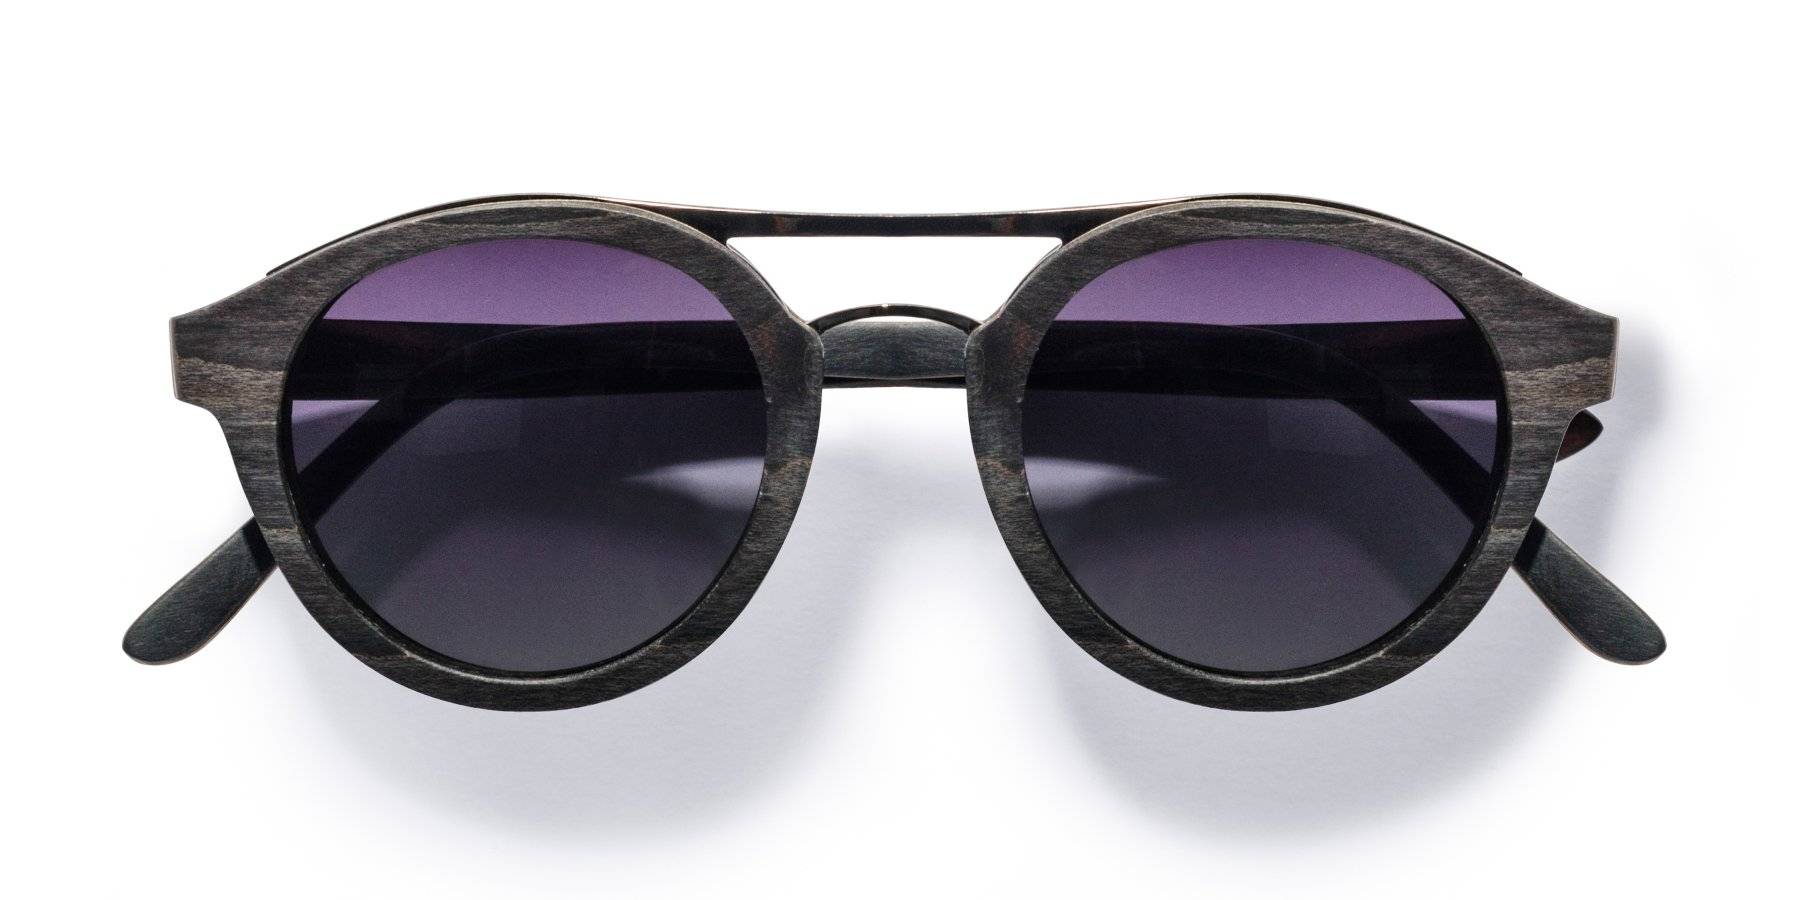 Kraywoods Ash, Vintage Aviator Double Bridge Sunglasses made from Walnut wood with Polarized Lenses